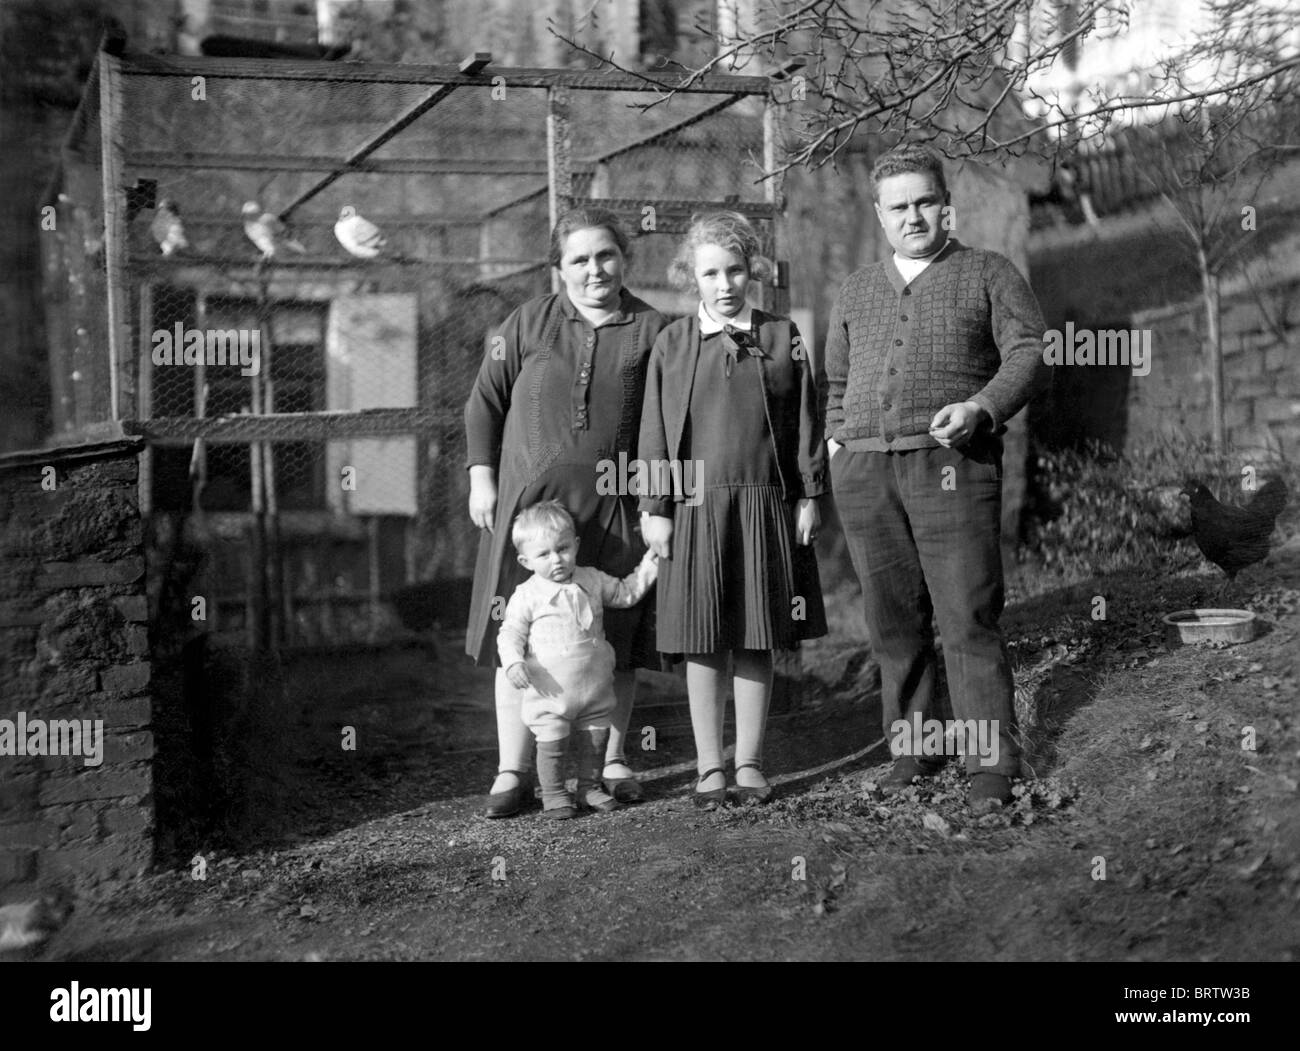 La familia del agricultor, imagen histórica, ca. 1932 Foto de stock